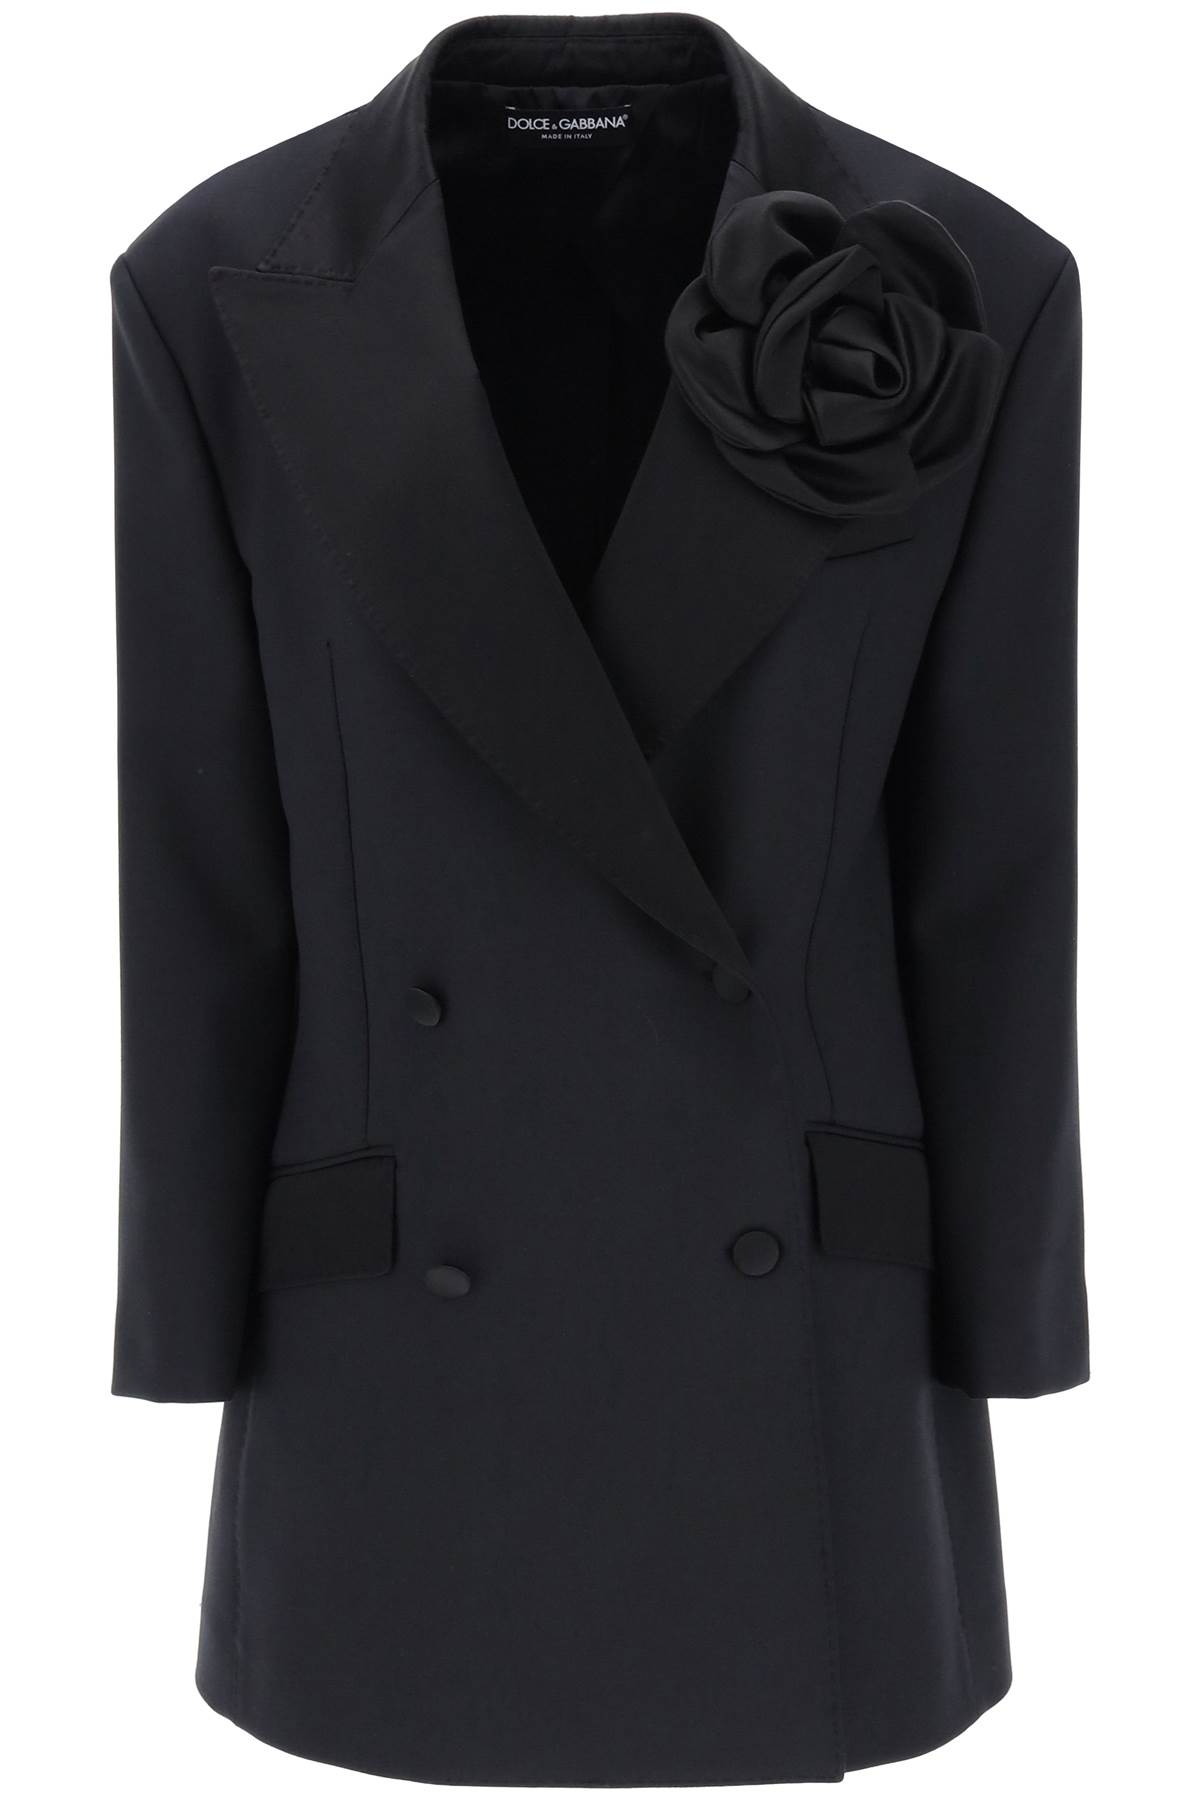 Dolce & Gabbana Blazer Jacket In Nero